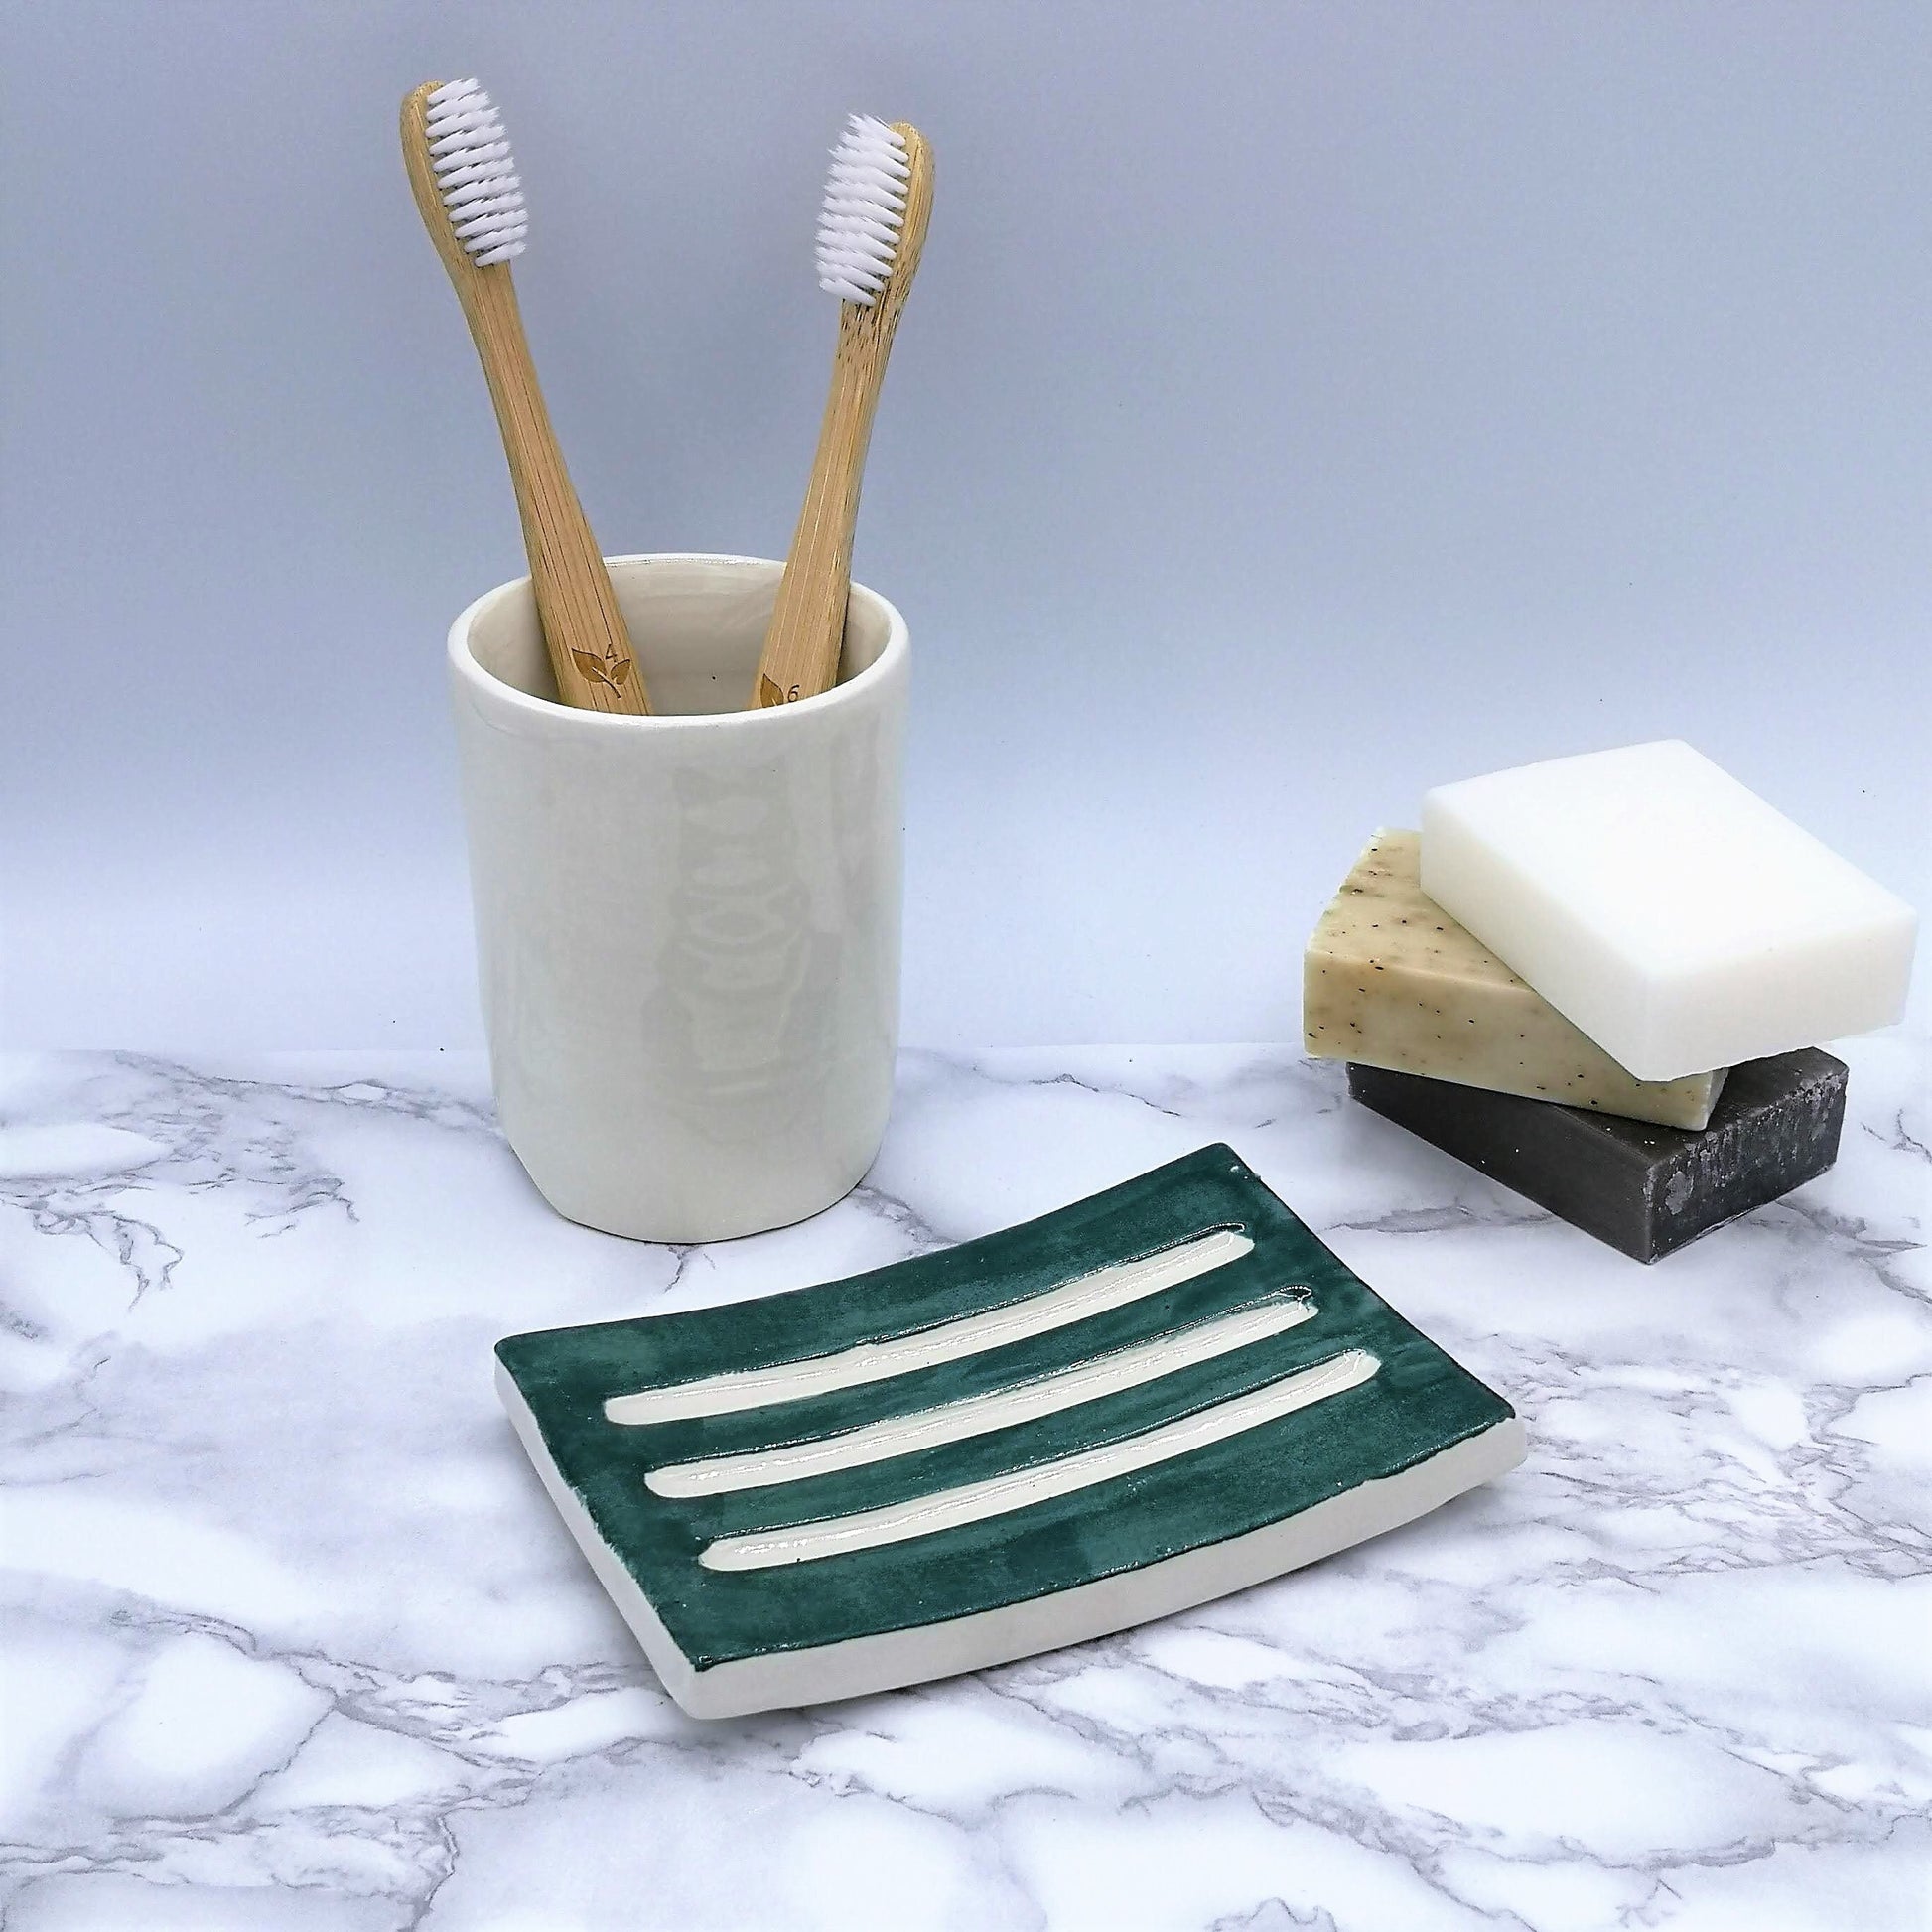 CLAY SOAP DISH with drain, rectangular soap dish for shower, self draining sponge holder, sustainable gift for her, shampoo bar holder - Ceramica Ana Rafael